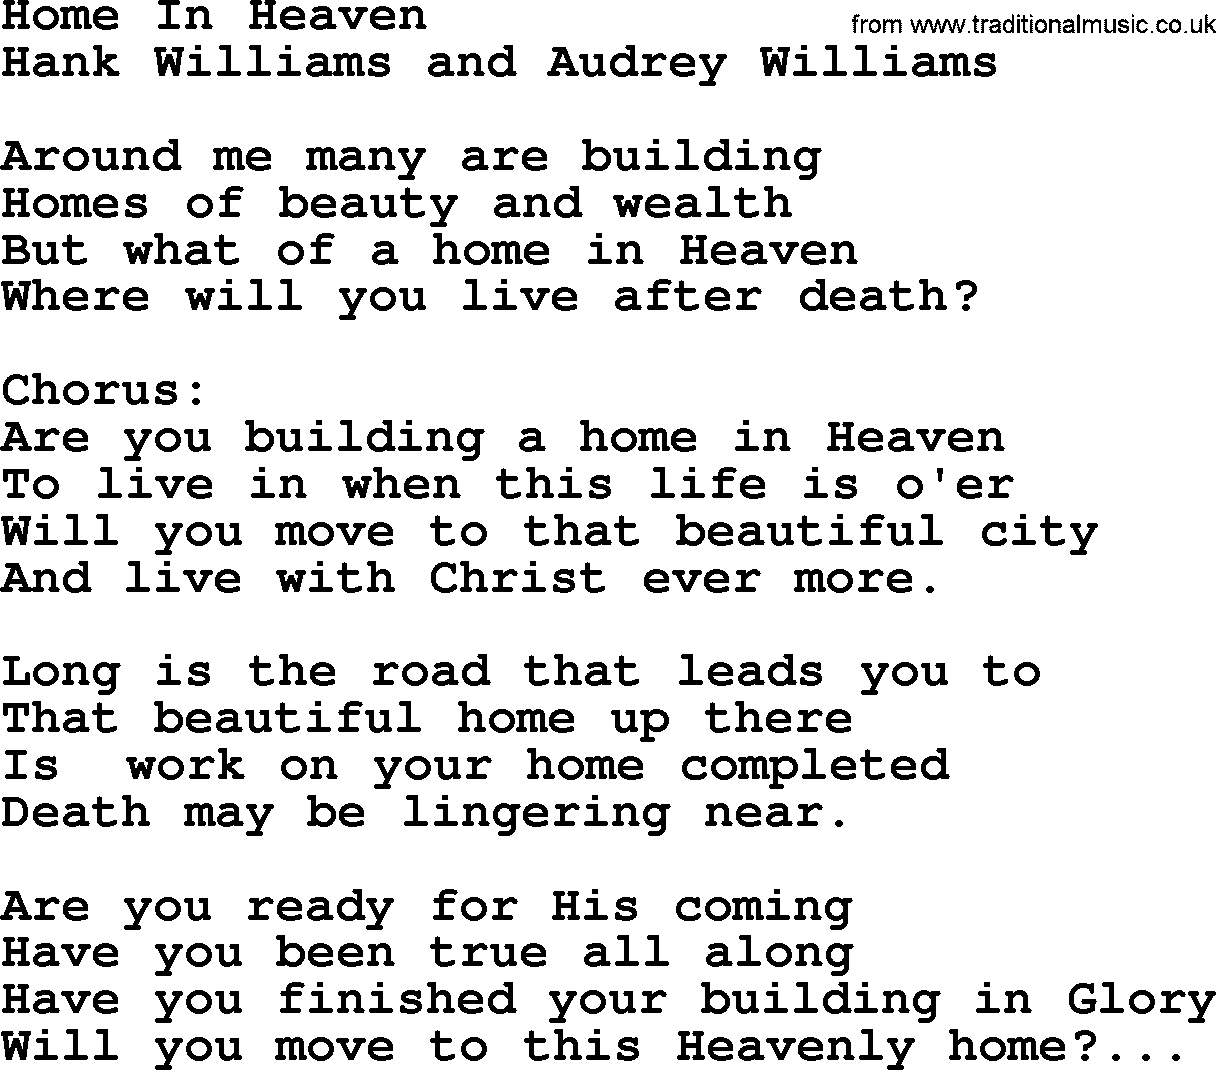 Hank Williams song Home In Heaven, lyrics